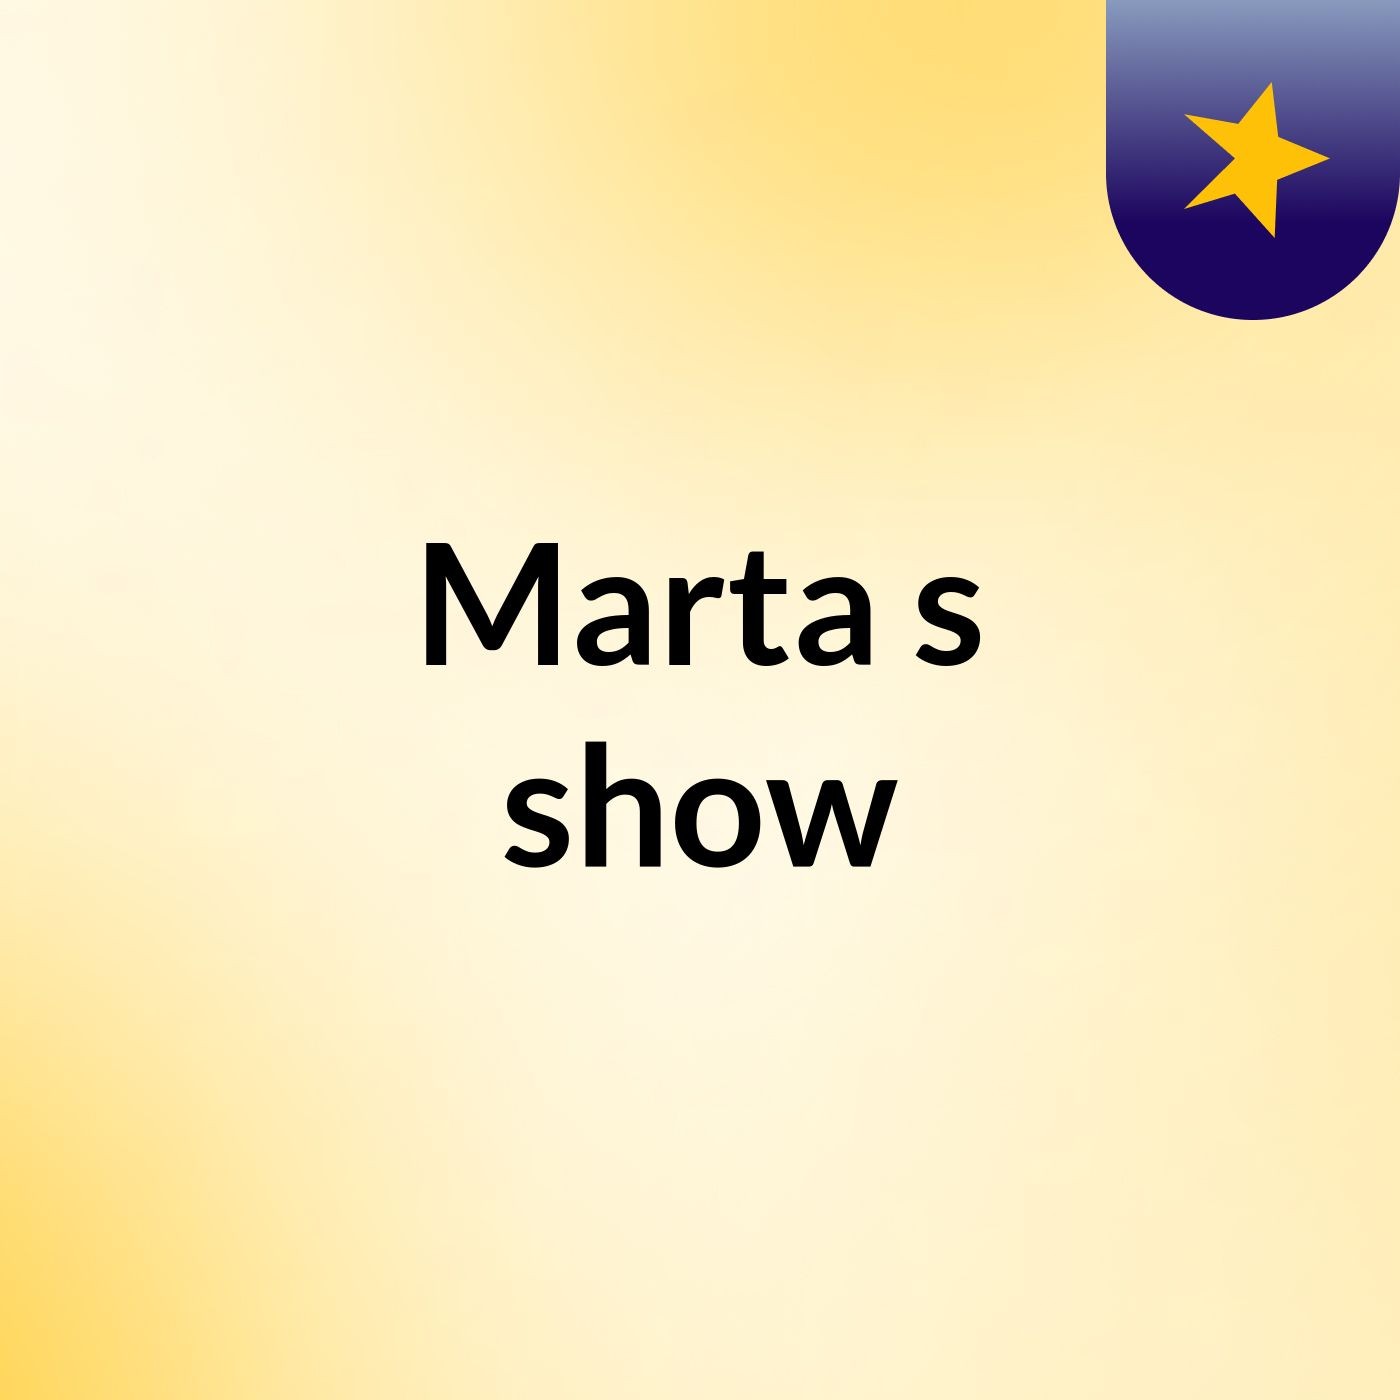 Marta's show